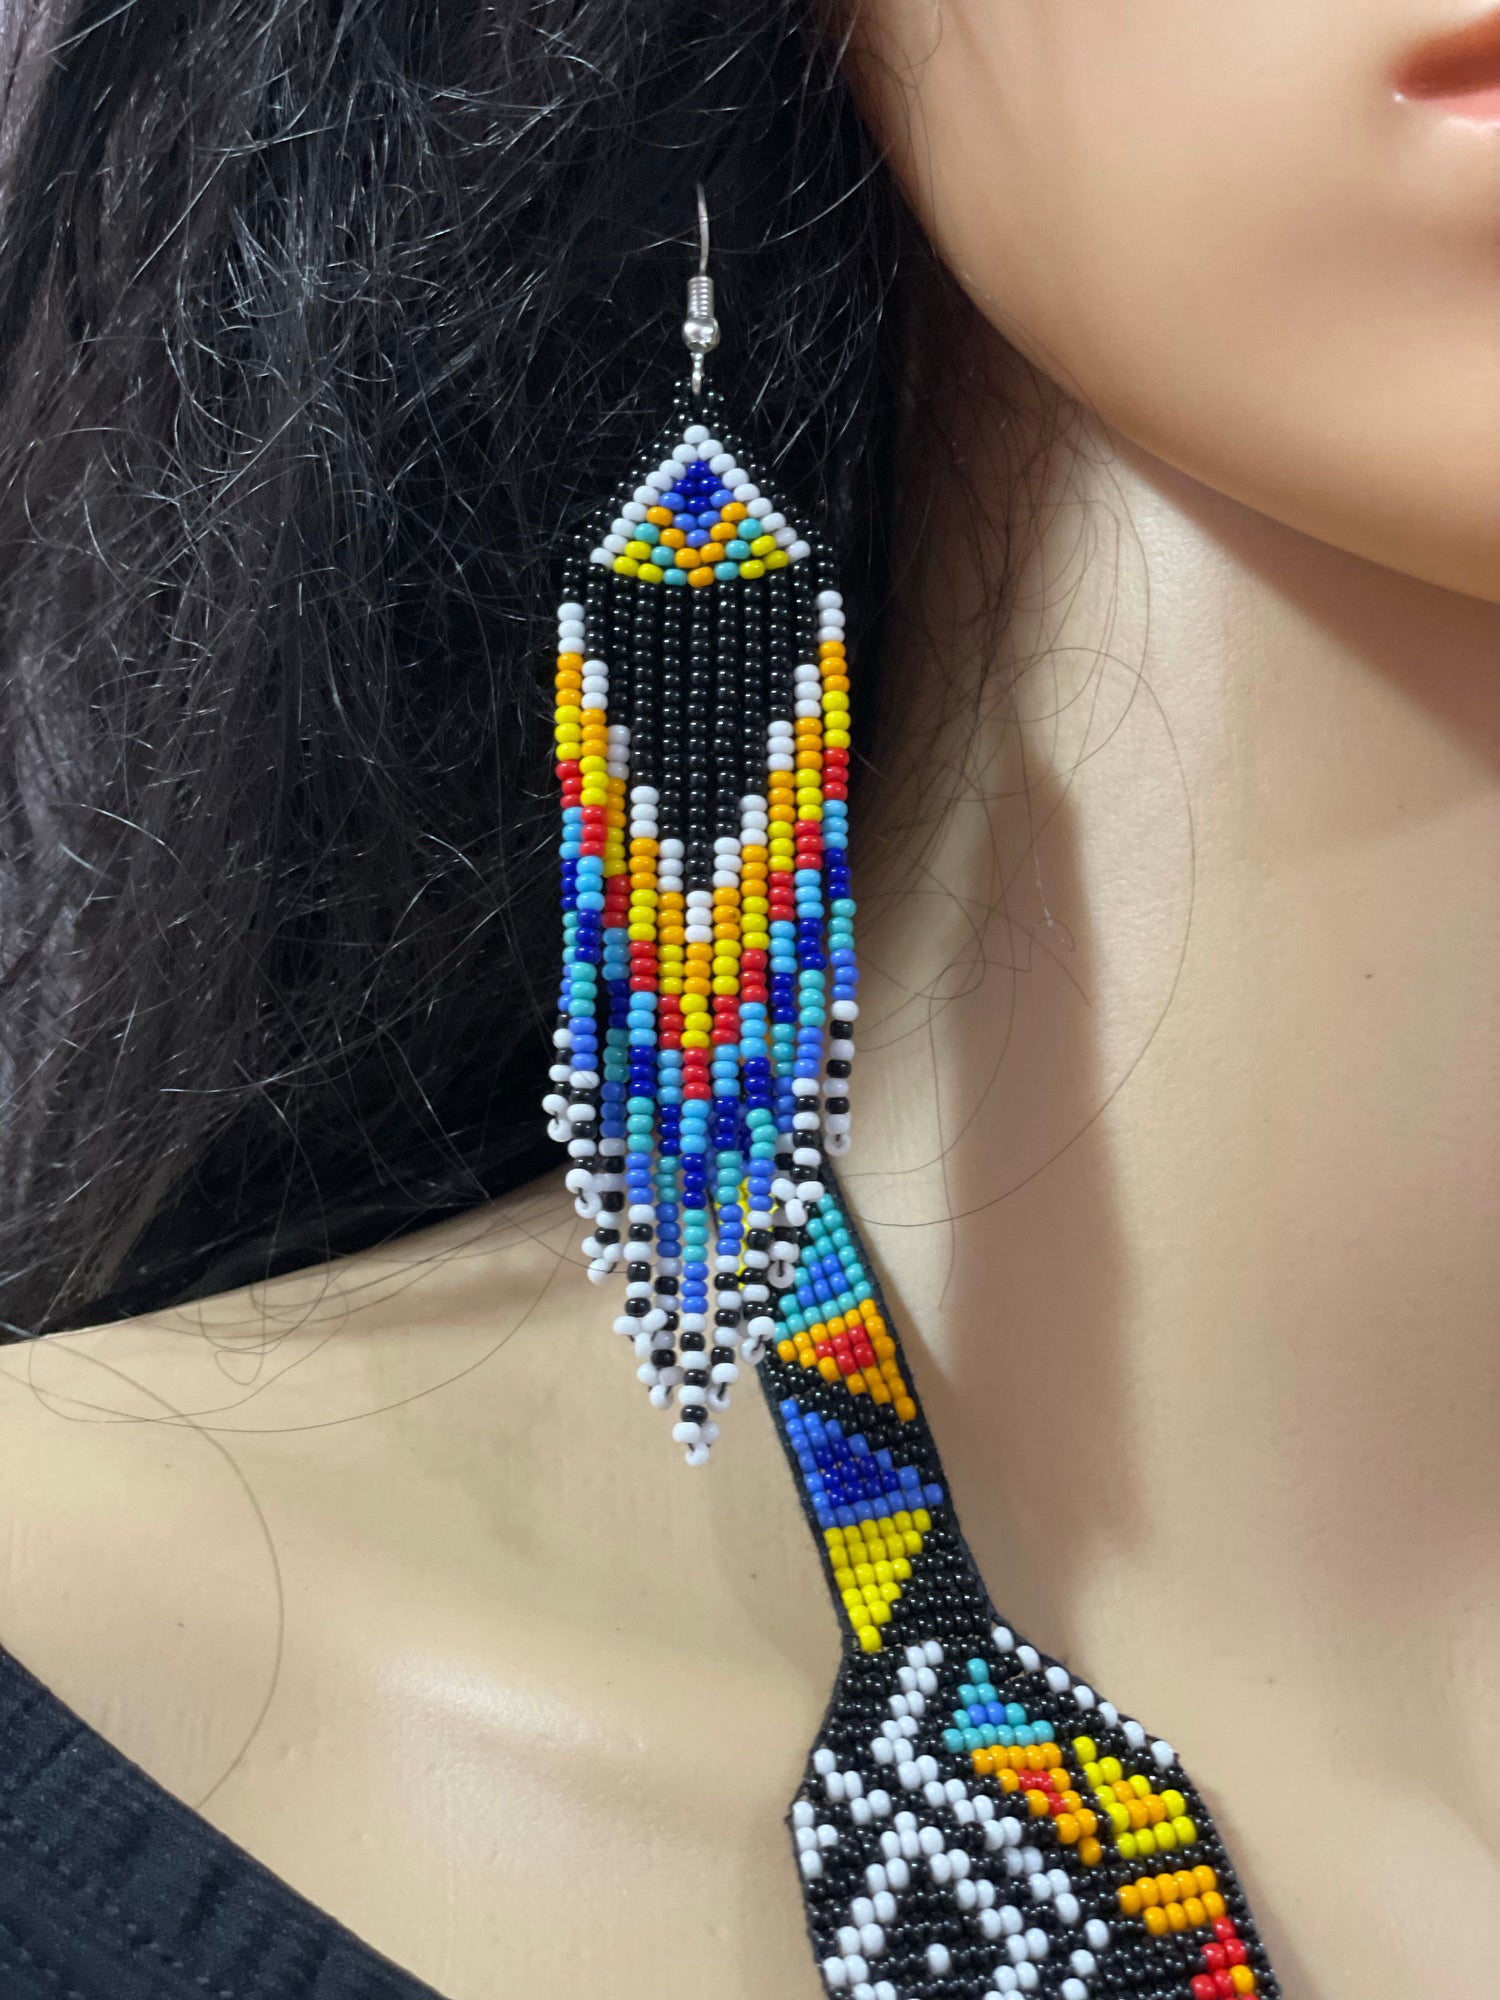 Seed bead necklace earrings set handcrafted tribal boho jewelry